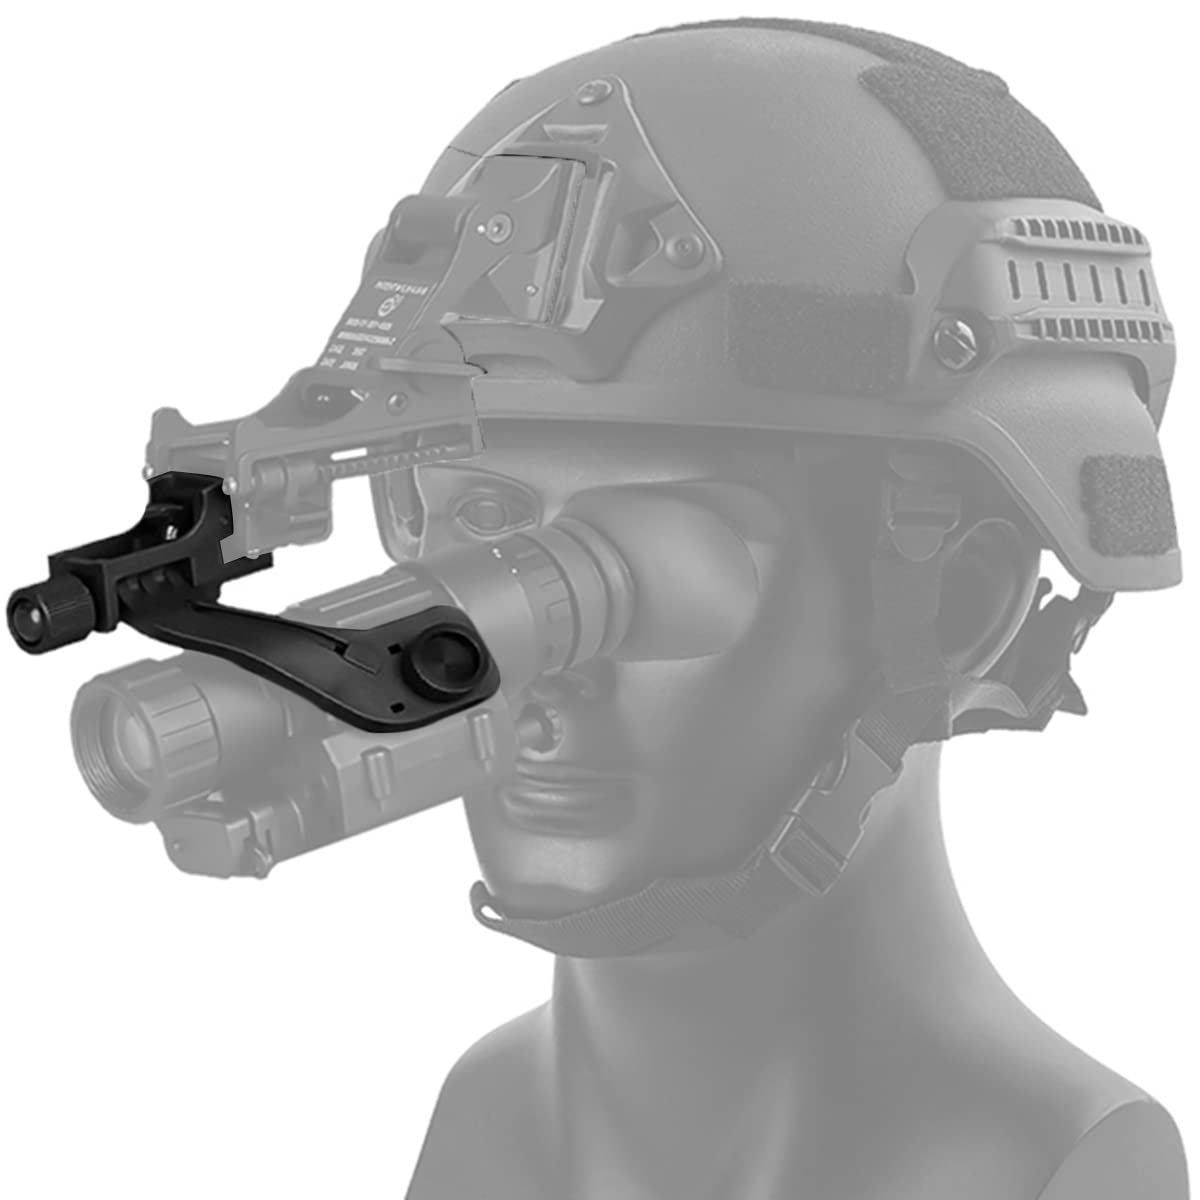 WLXW Tactical Helmet Accessory Improved, Für PVS-14 PVS-7 Nachtsichtgerät J Arm Adapter PVS 14 Mount Für Fast M88 Mich Helm (Schwarz),B